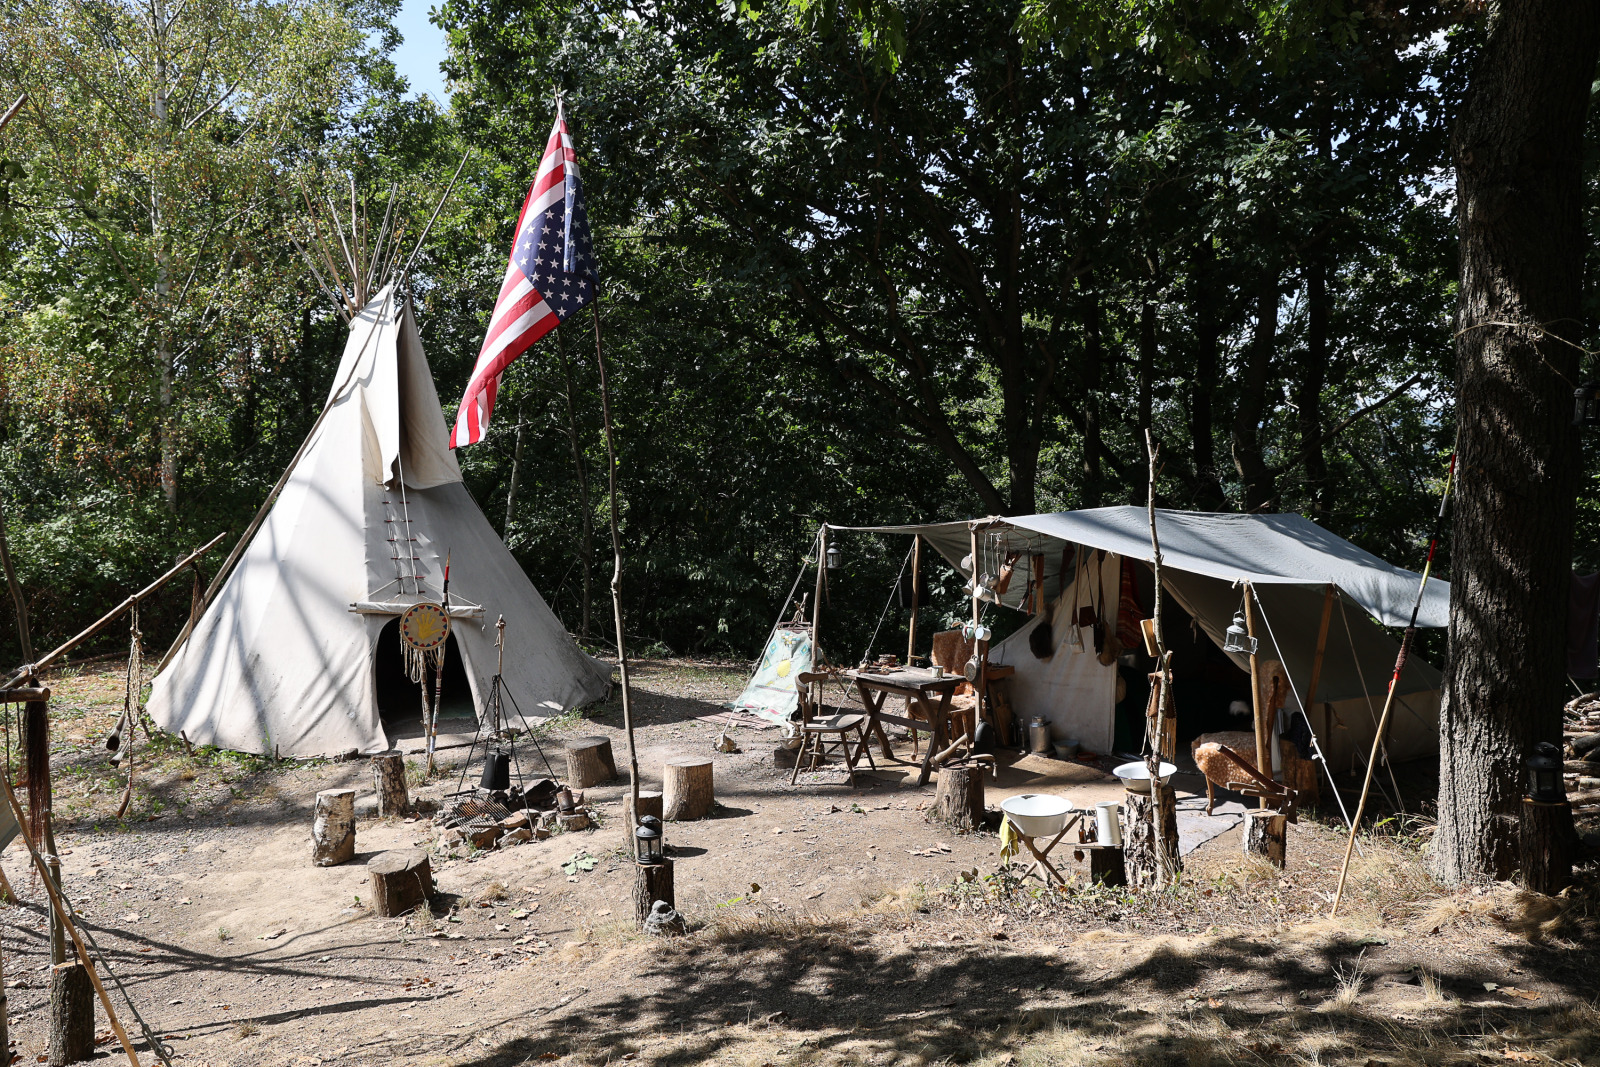 Indianenkamp en tipi - West-Amerika in België - Chaudfontaine